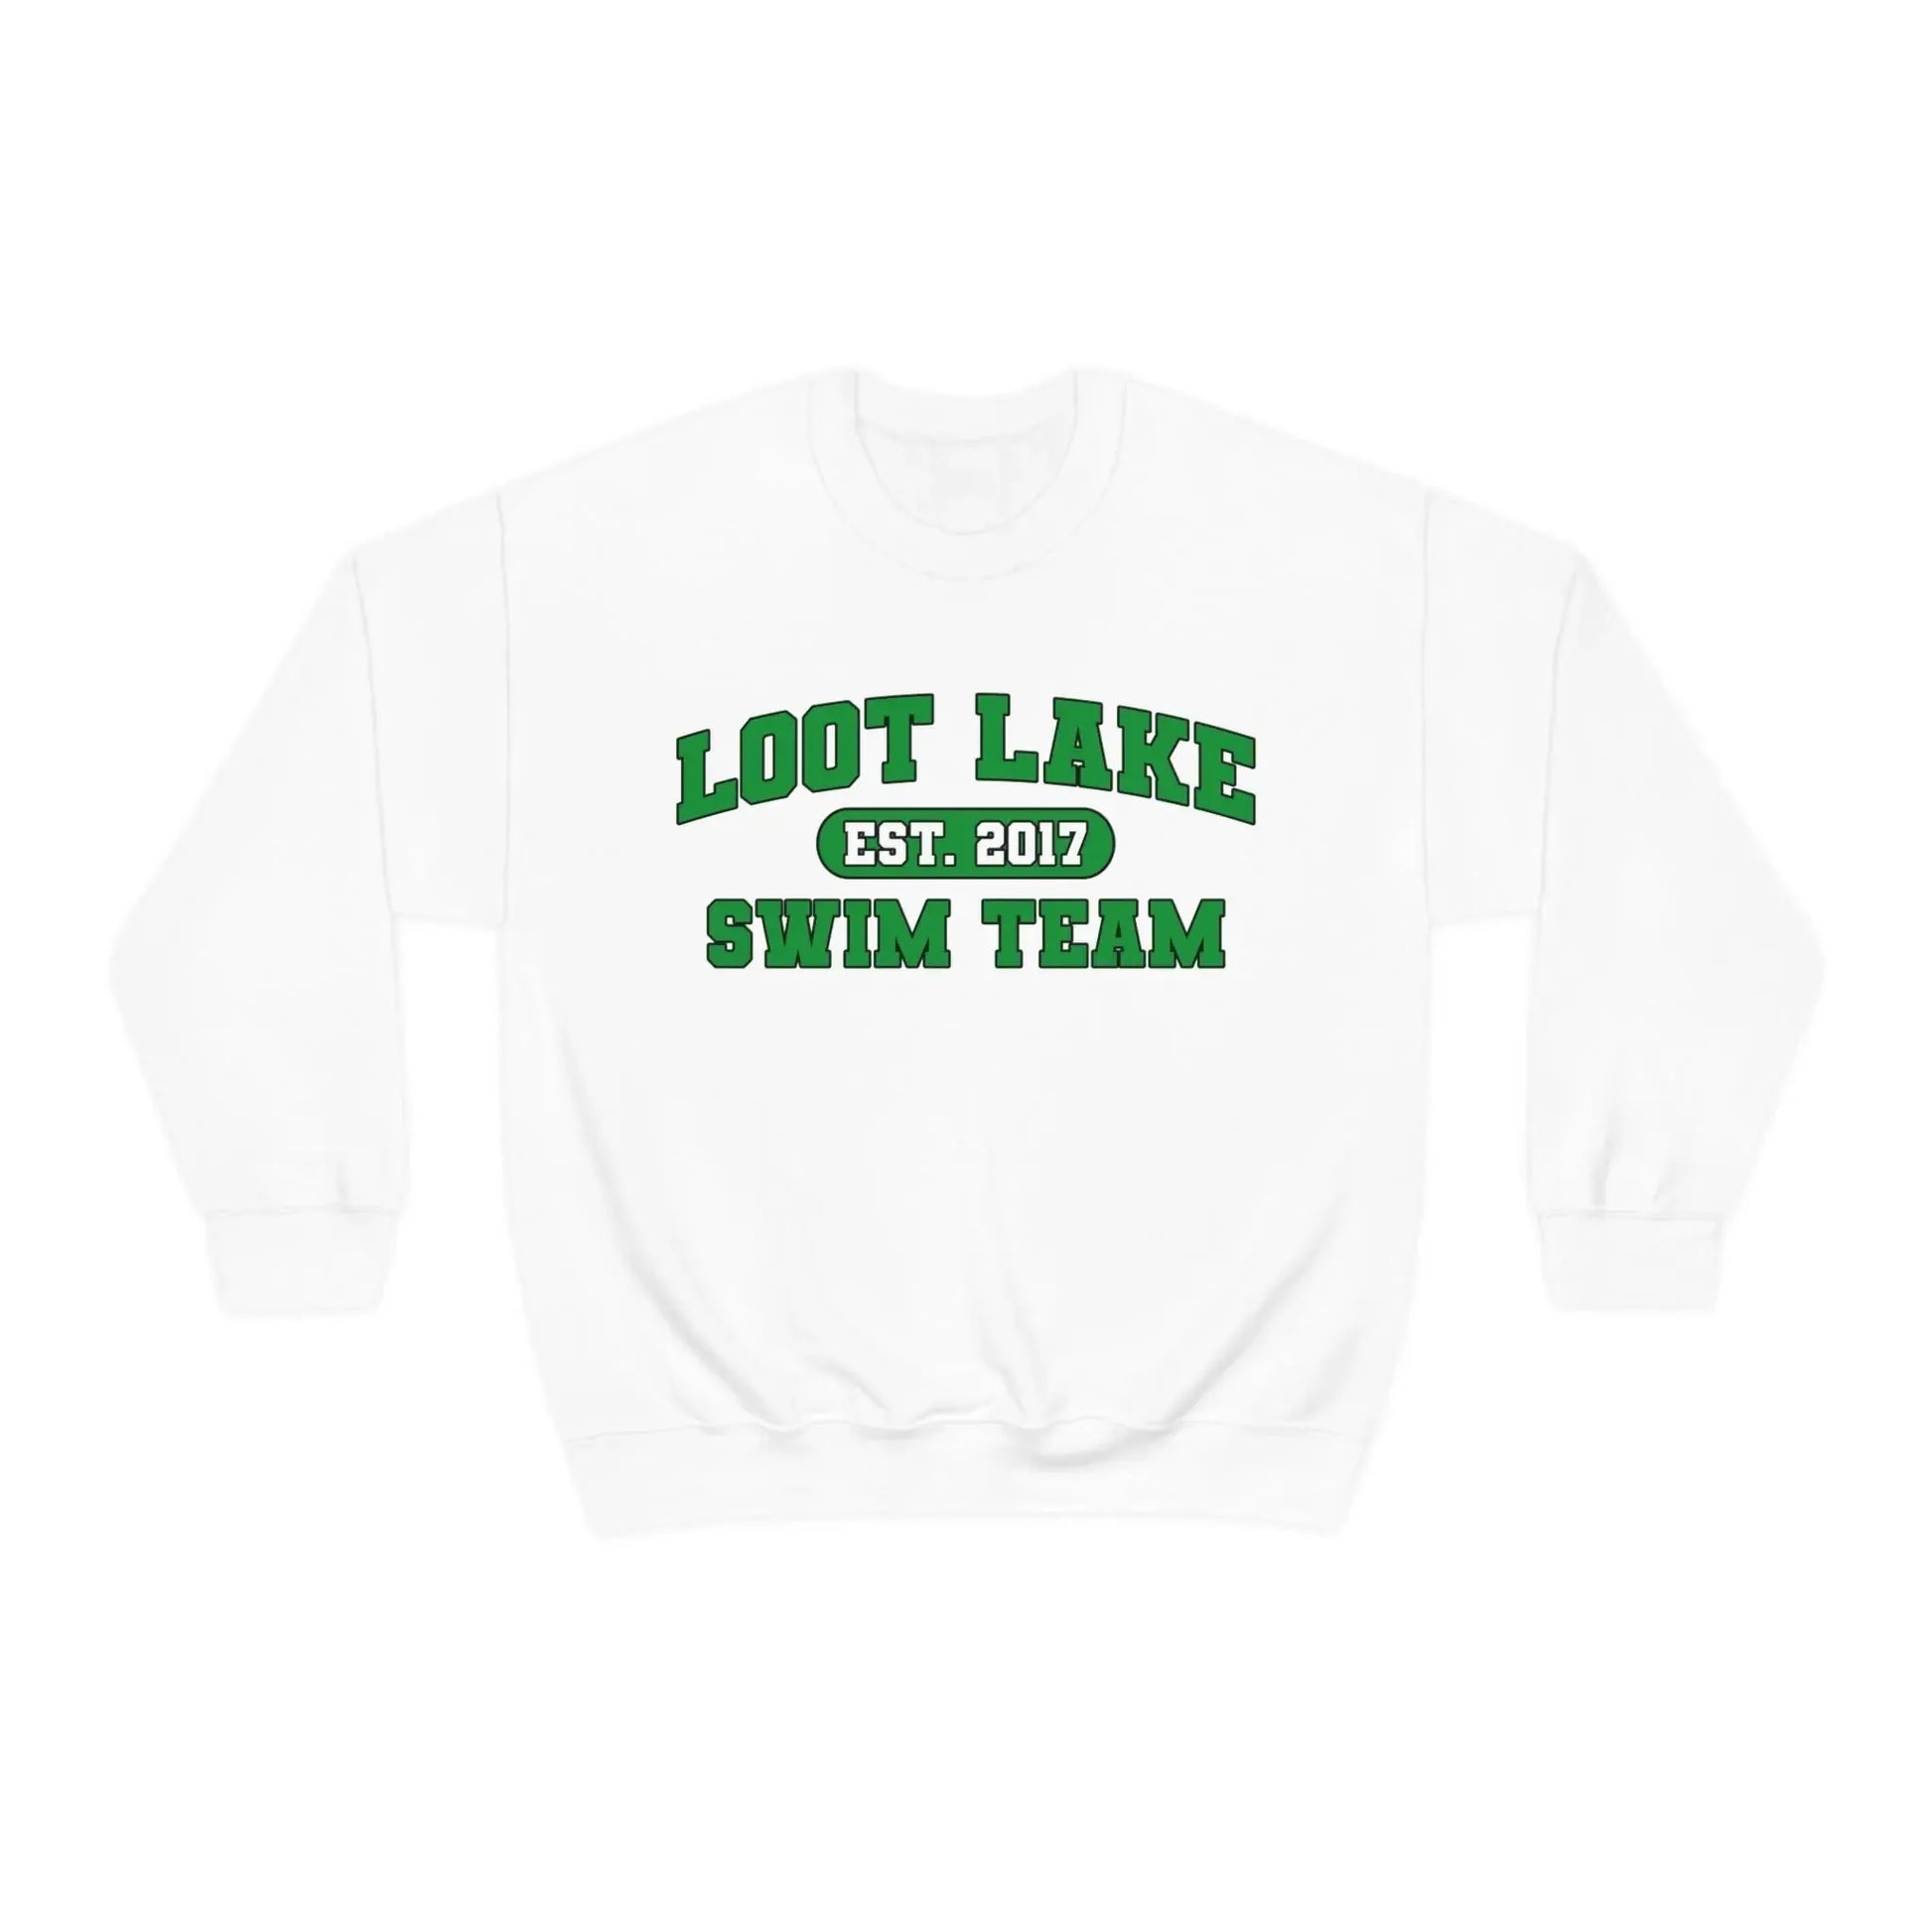 Loot Lake Swim Team Sweatshirt - Failure International failureinternational.com store brand tiktok instagram